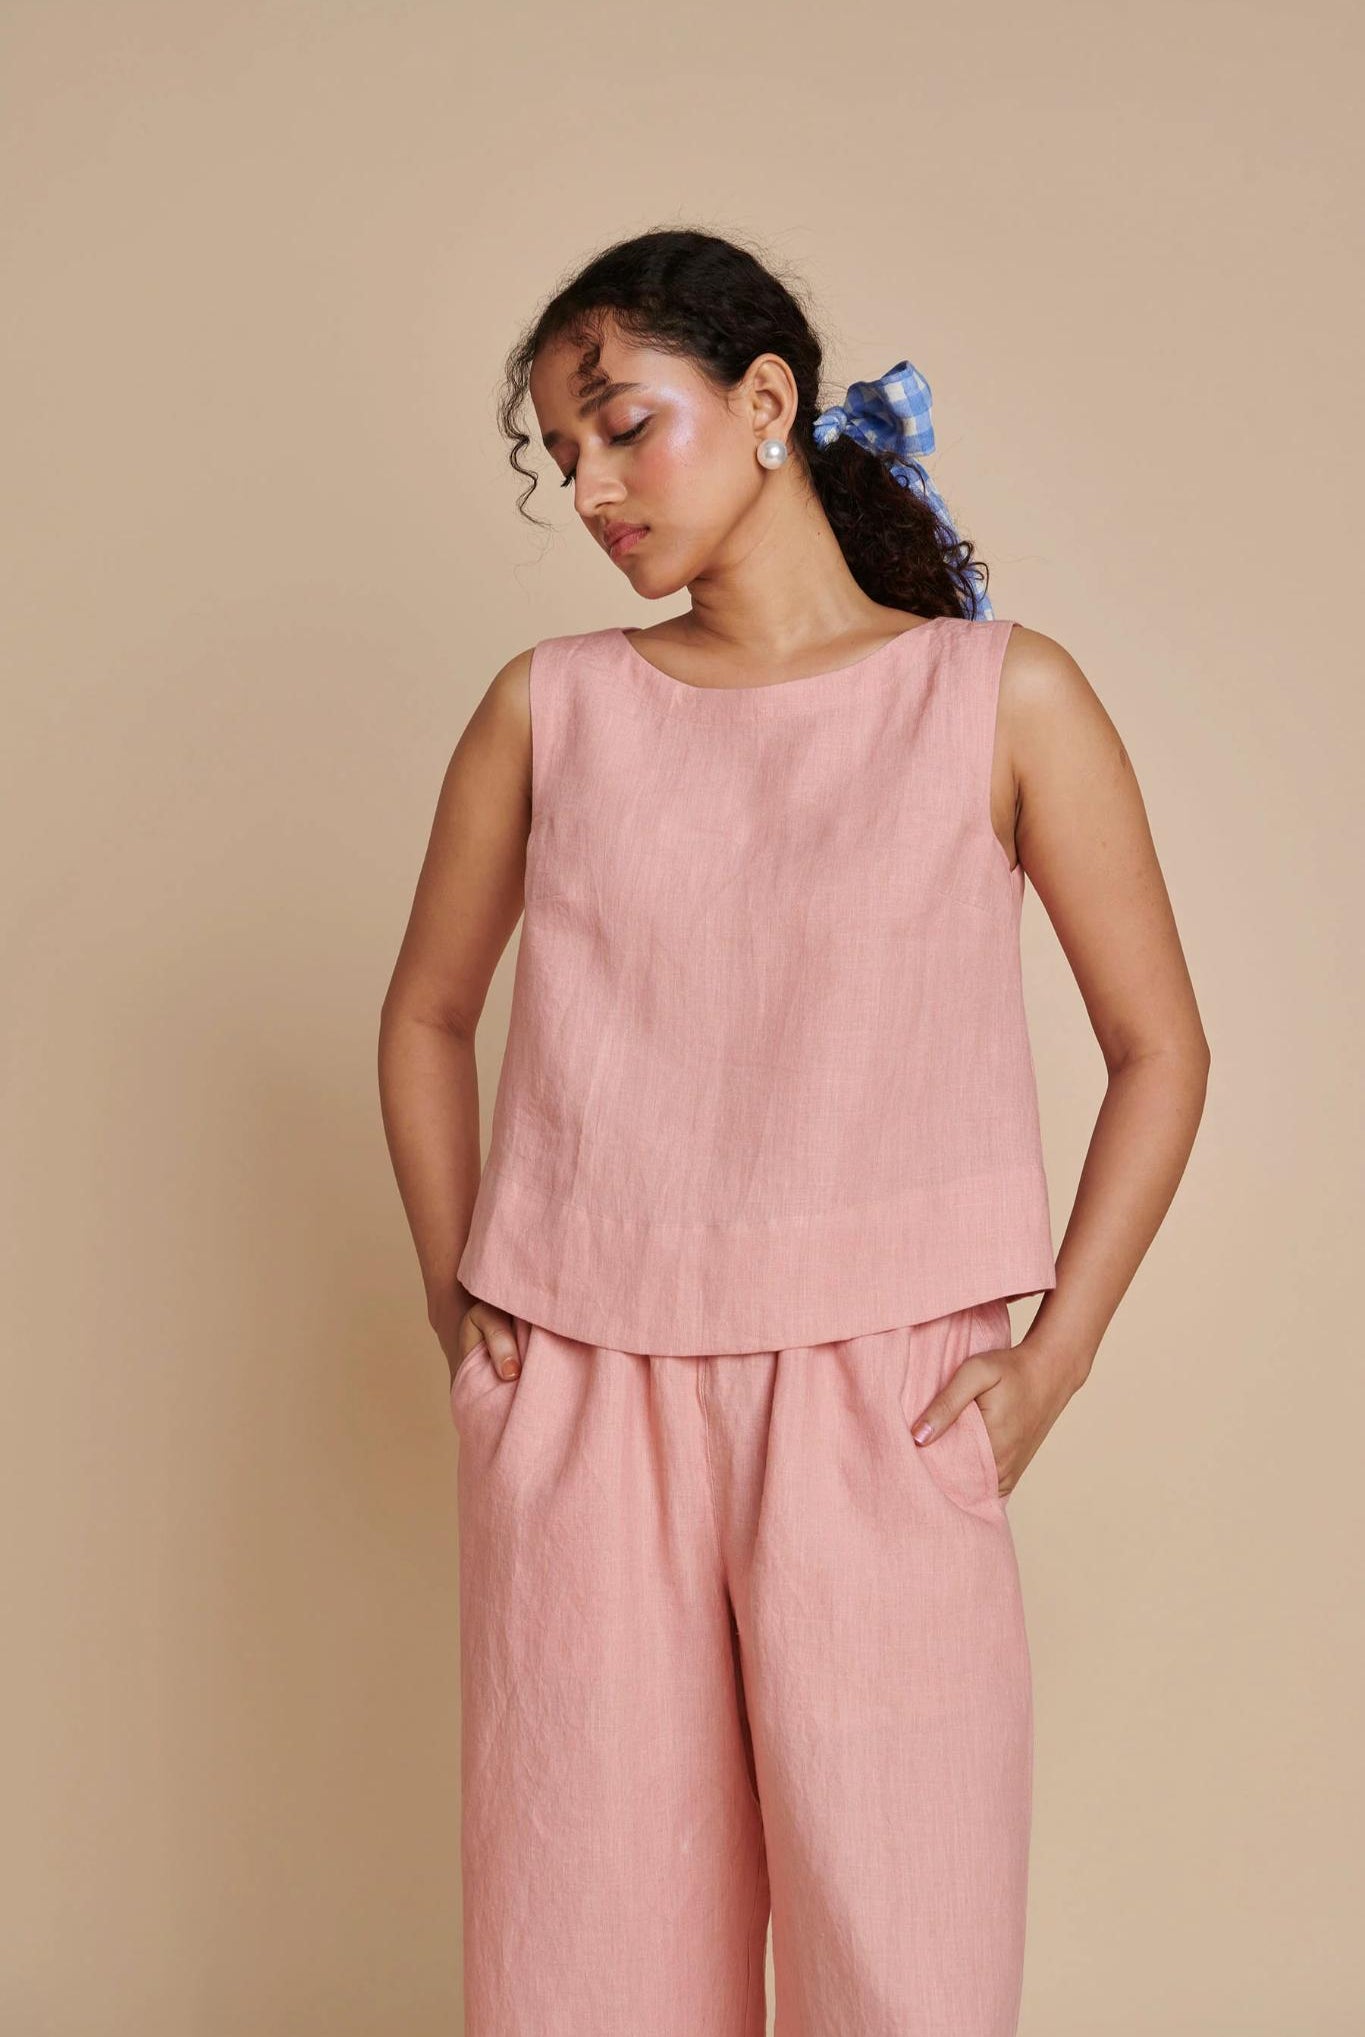 Candy Floss Linen Sleeveless Top & Pyjama Set - CiceroniCo-ord SetSaphed